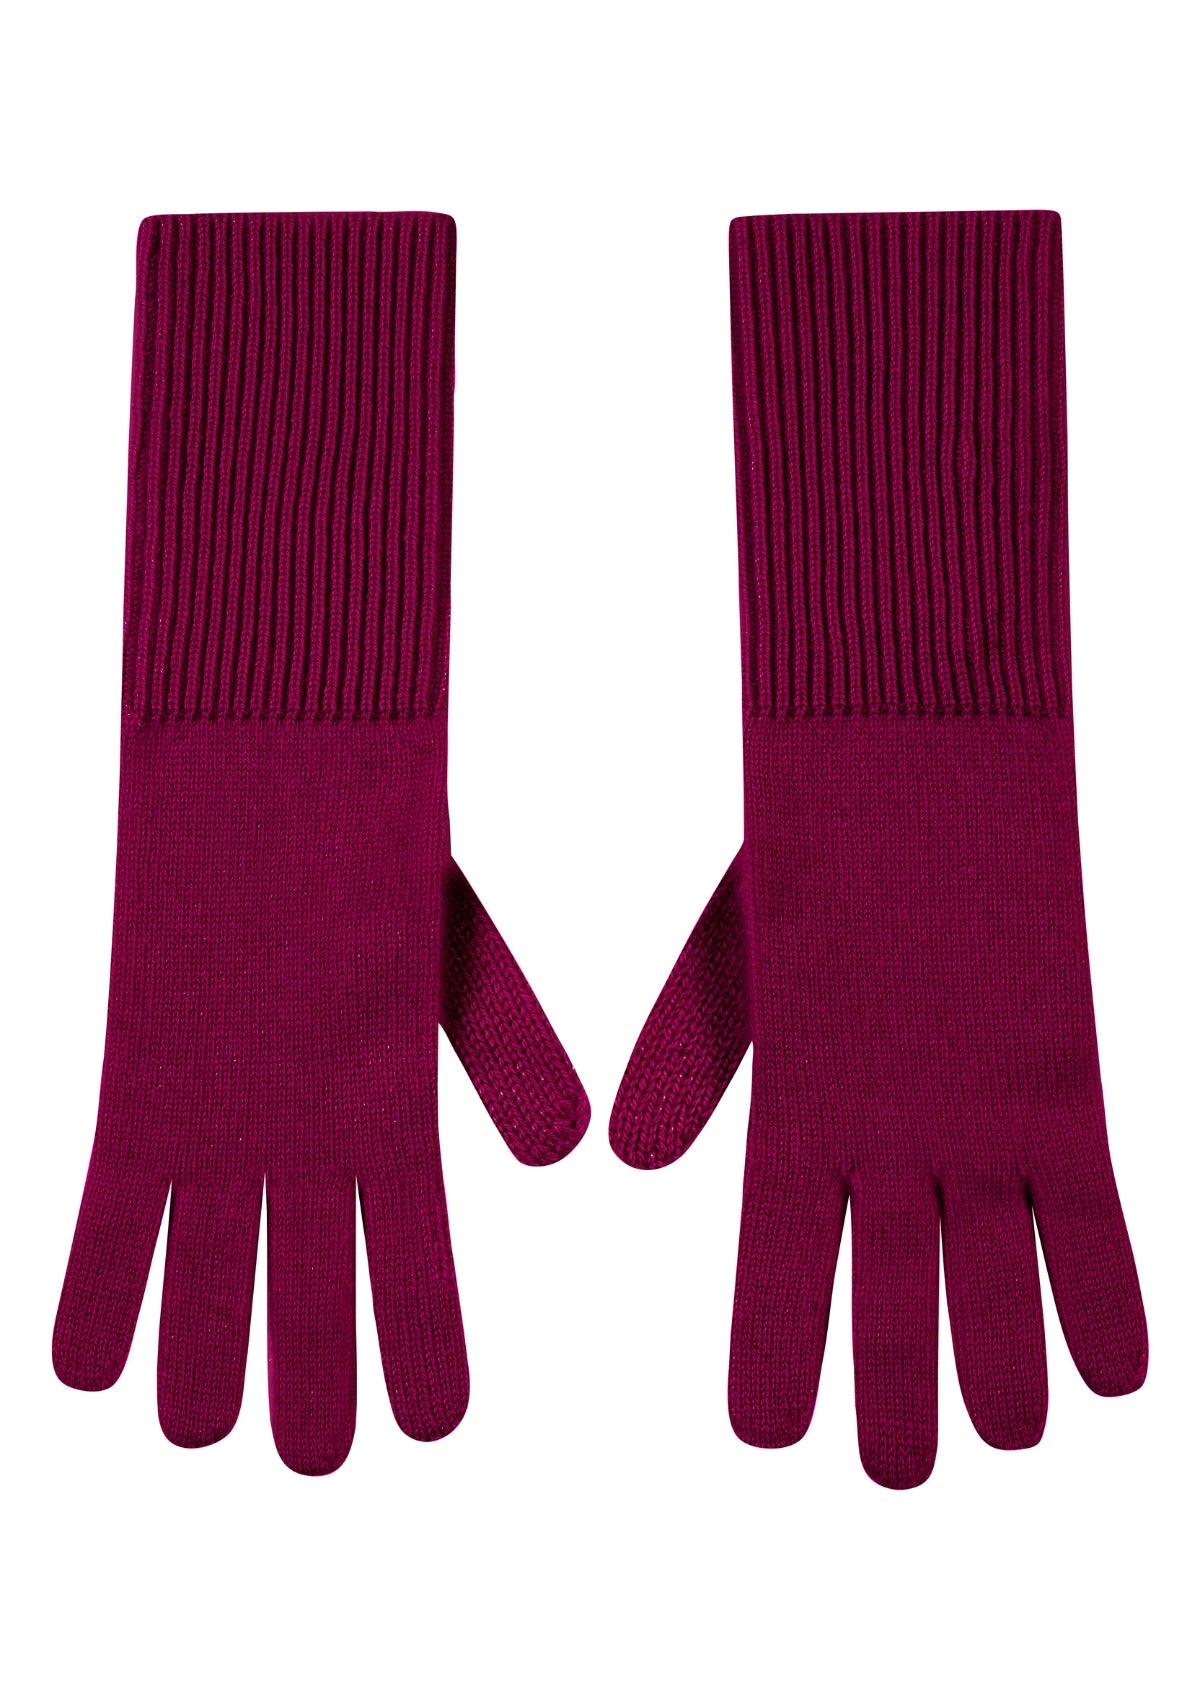 Cashmere Glove in Barolo Red